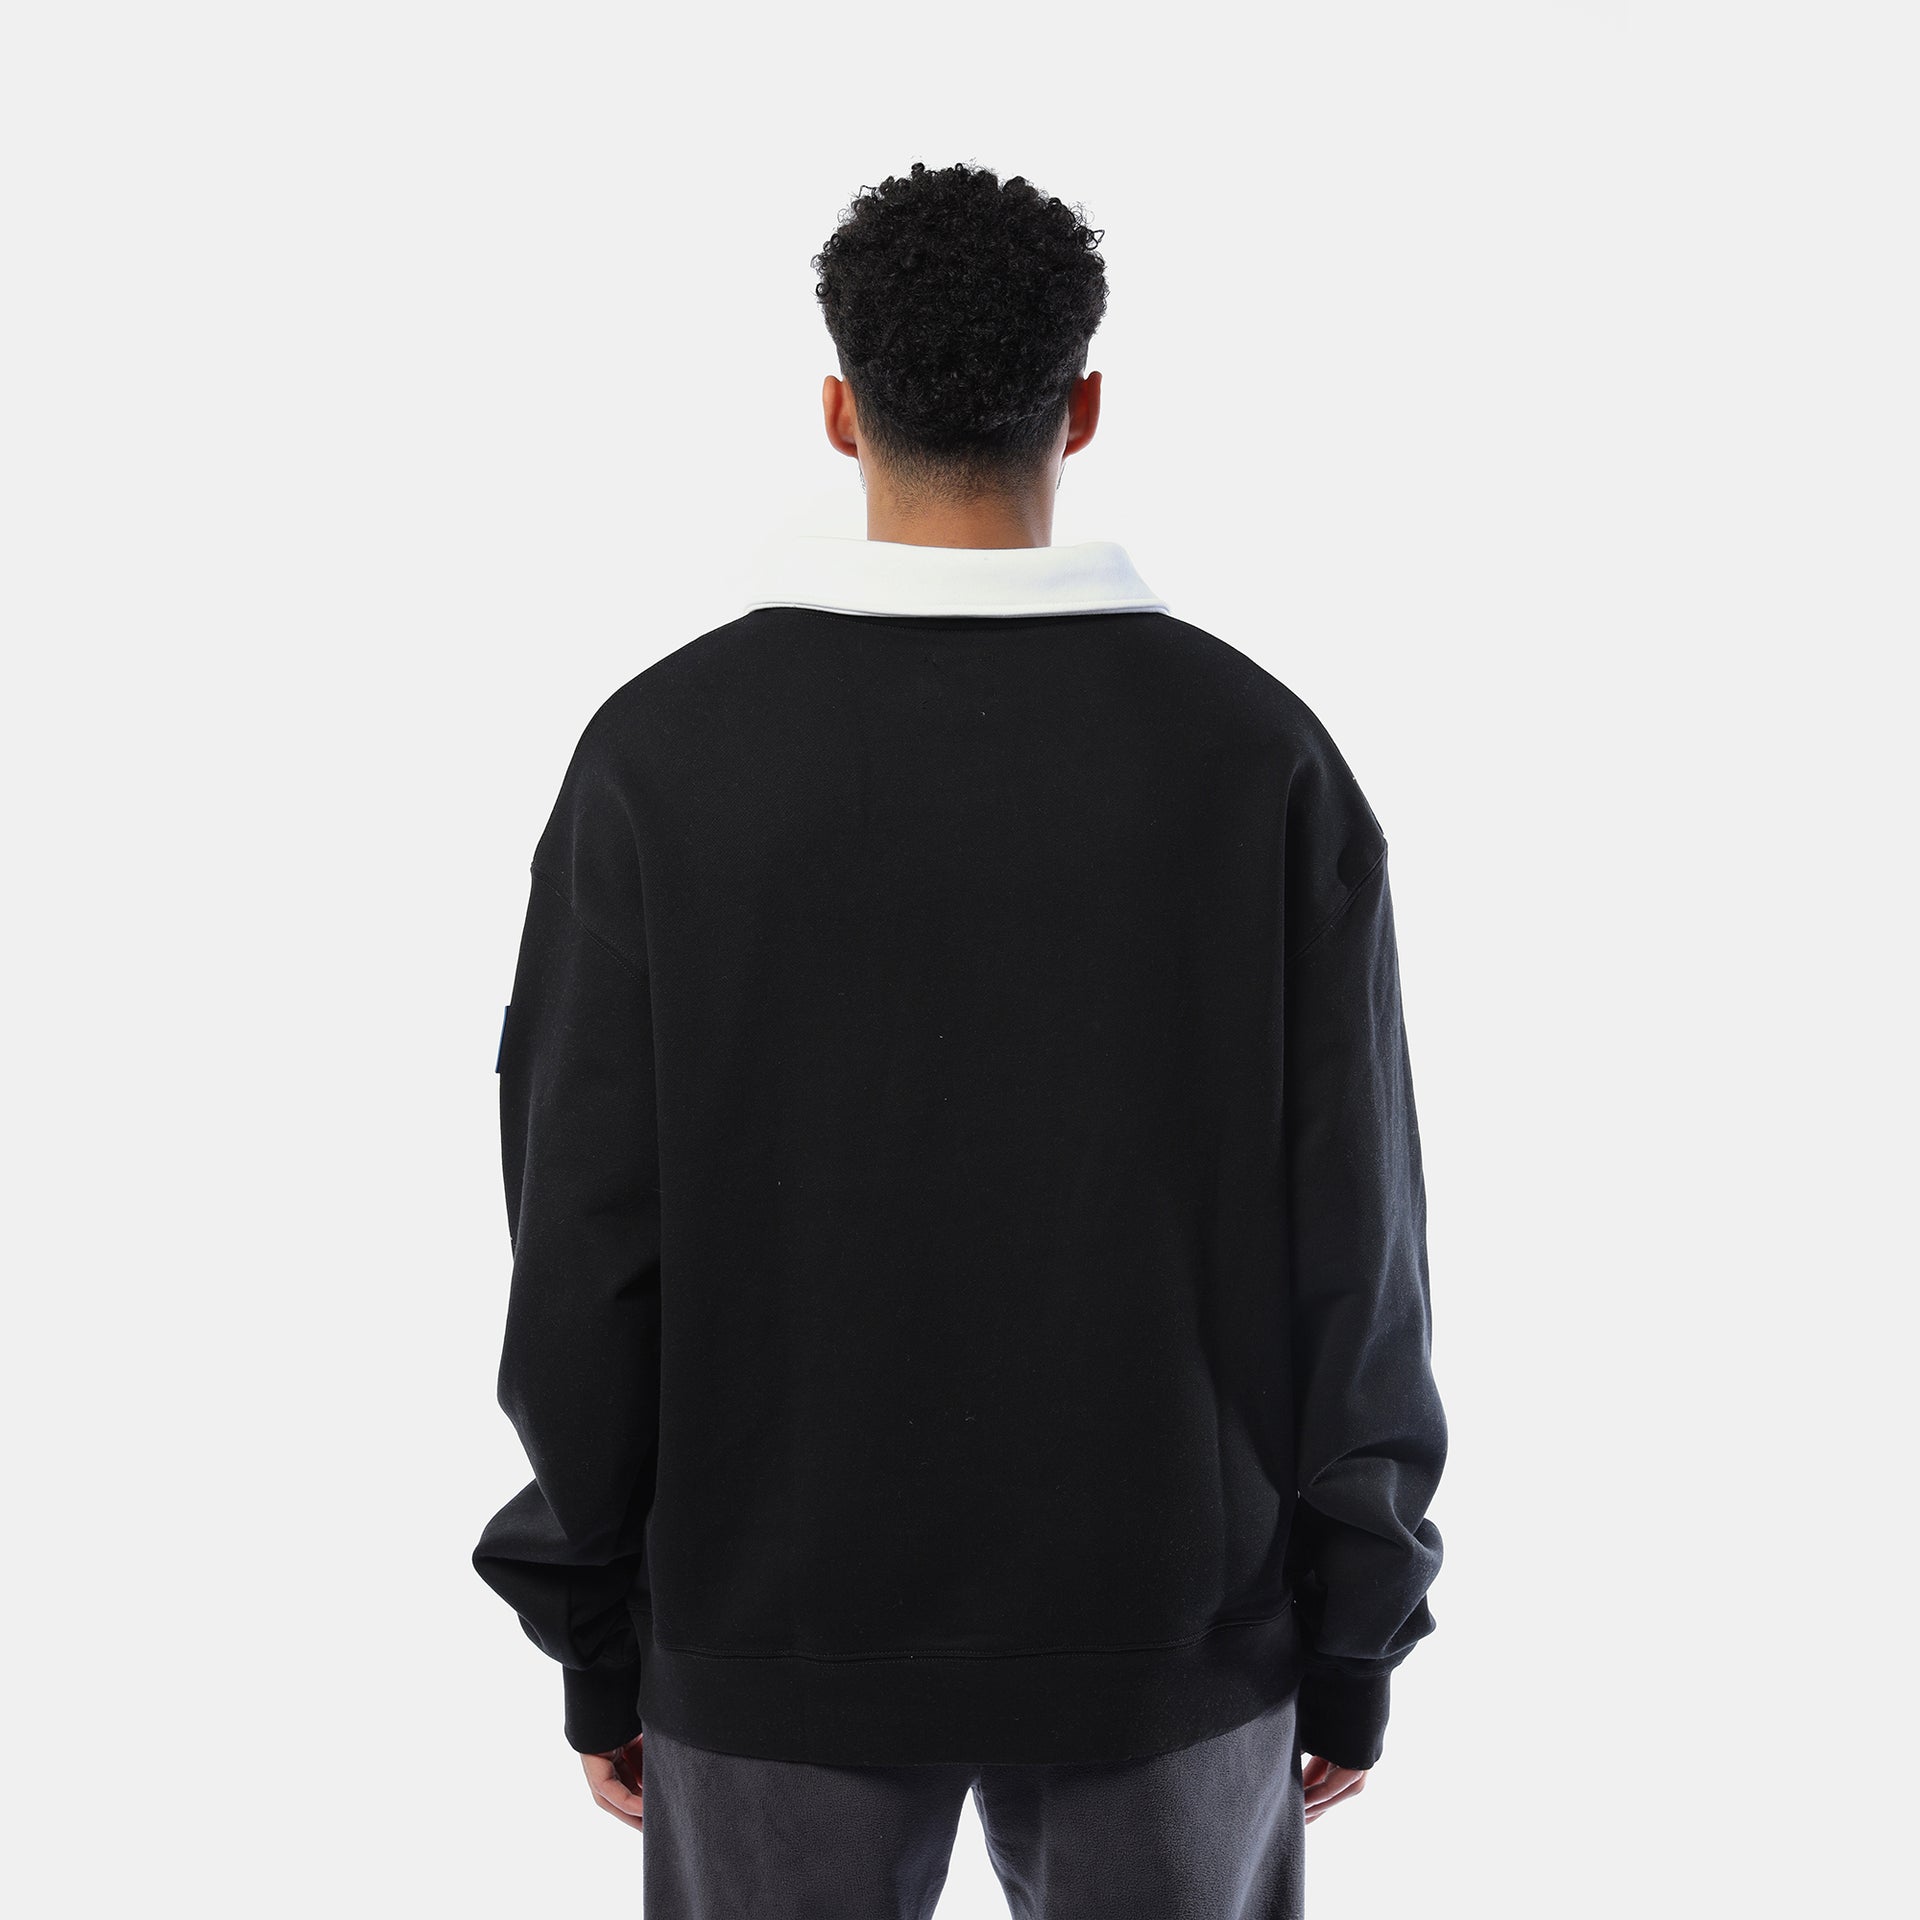 White collar black sweater